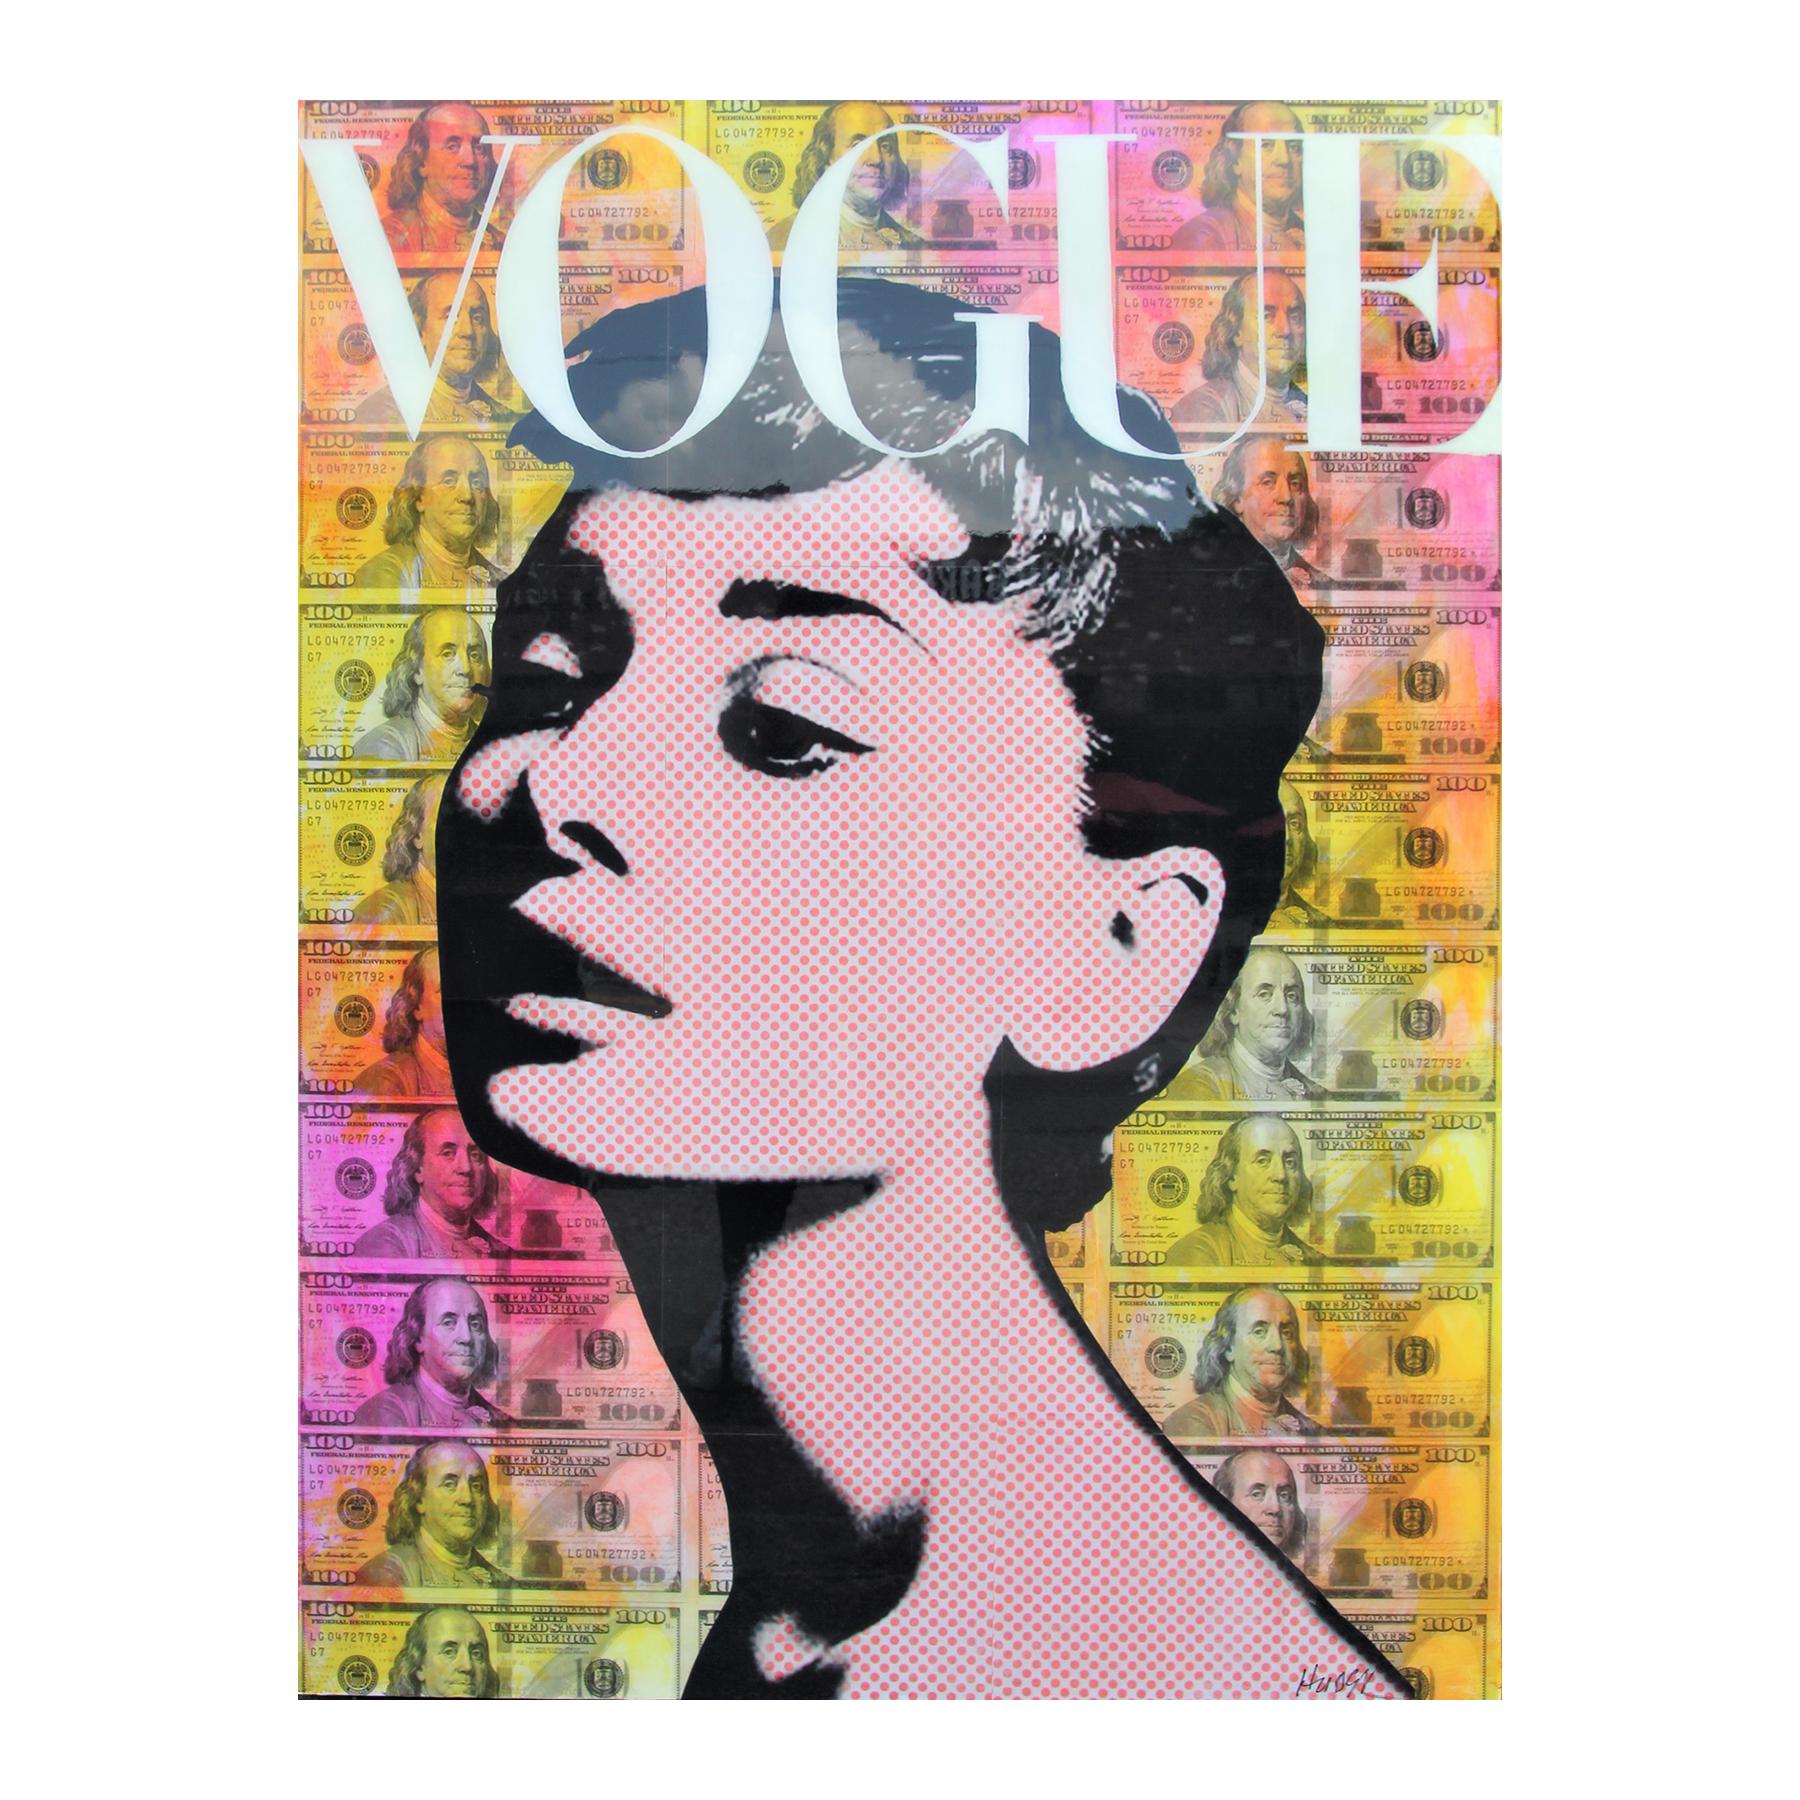 Jim Hudek Portrait Painting - "Audrey in the Money" Warm Toned Audrey Hepburn Mixed Media Pop Art Collage